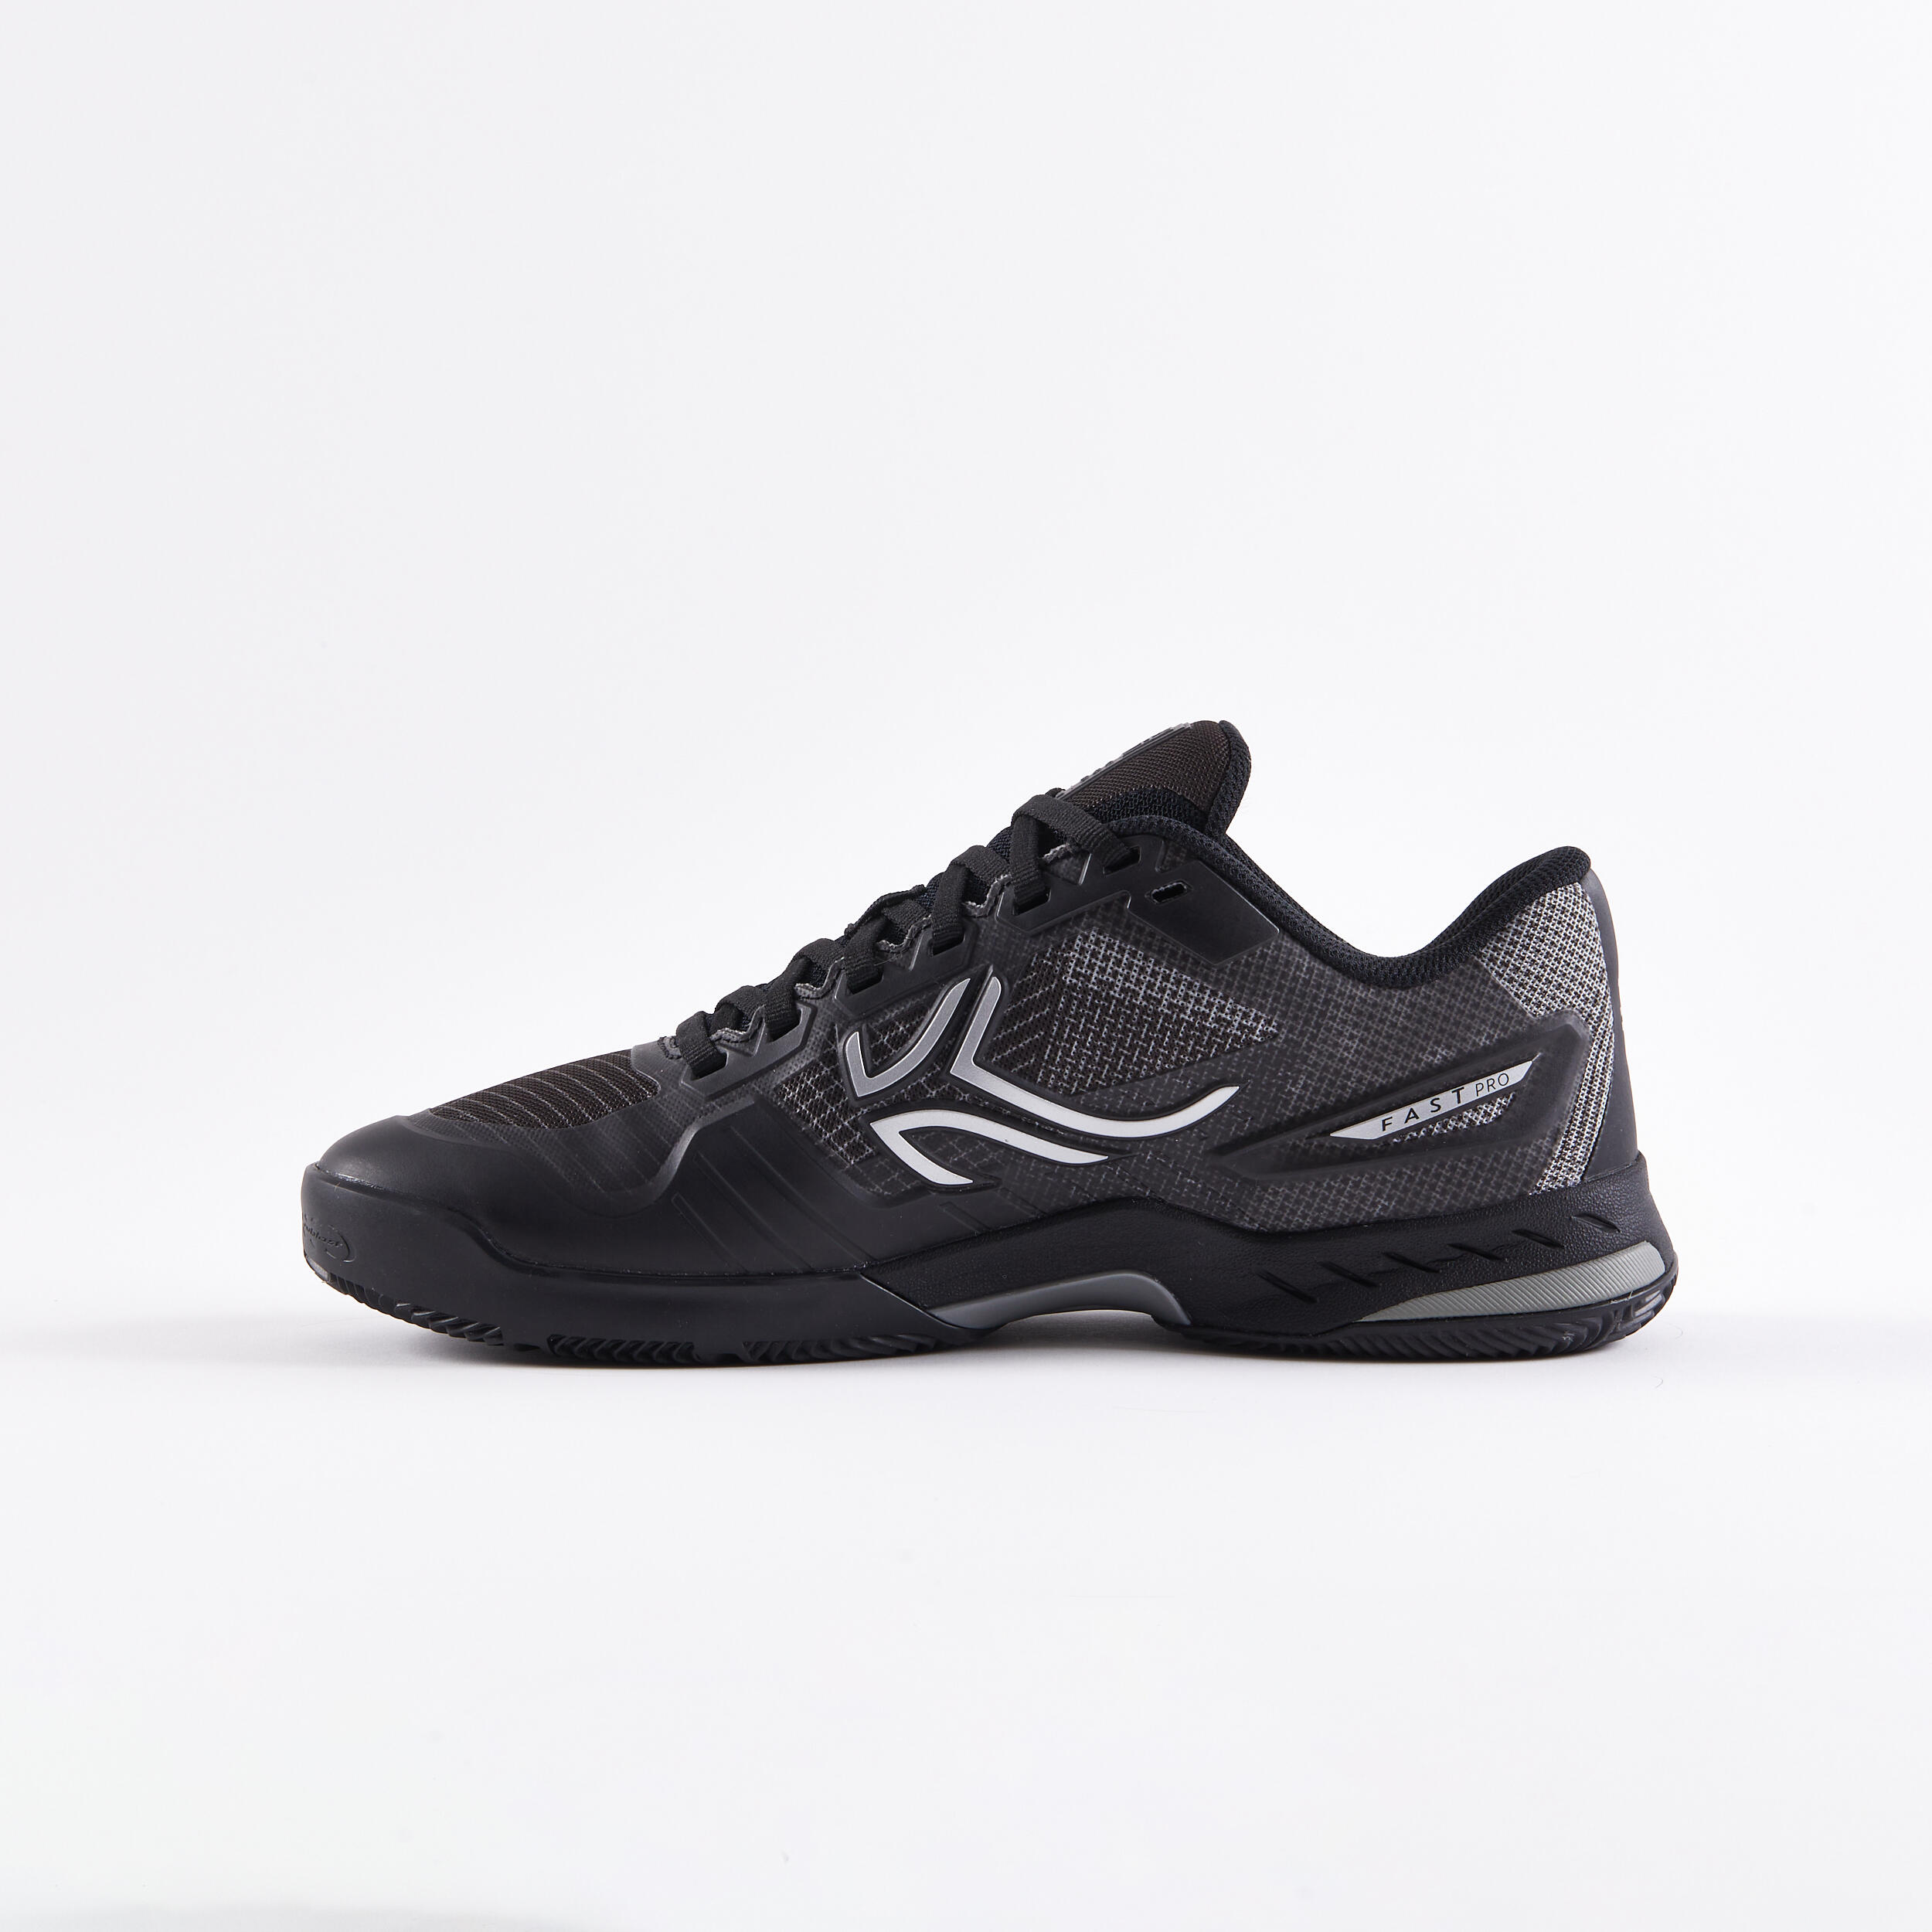 Men's Clay Court Tennis Shoes TS990 - Black 2/8